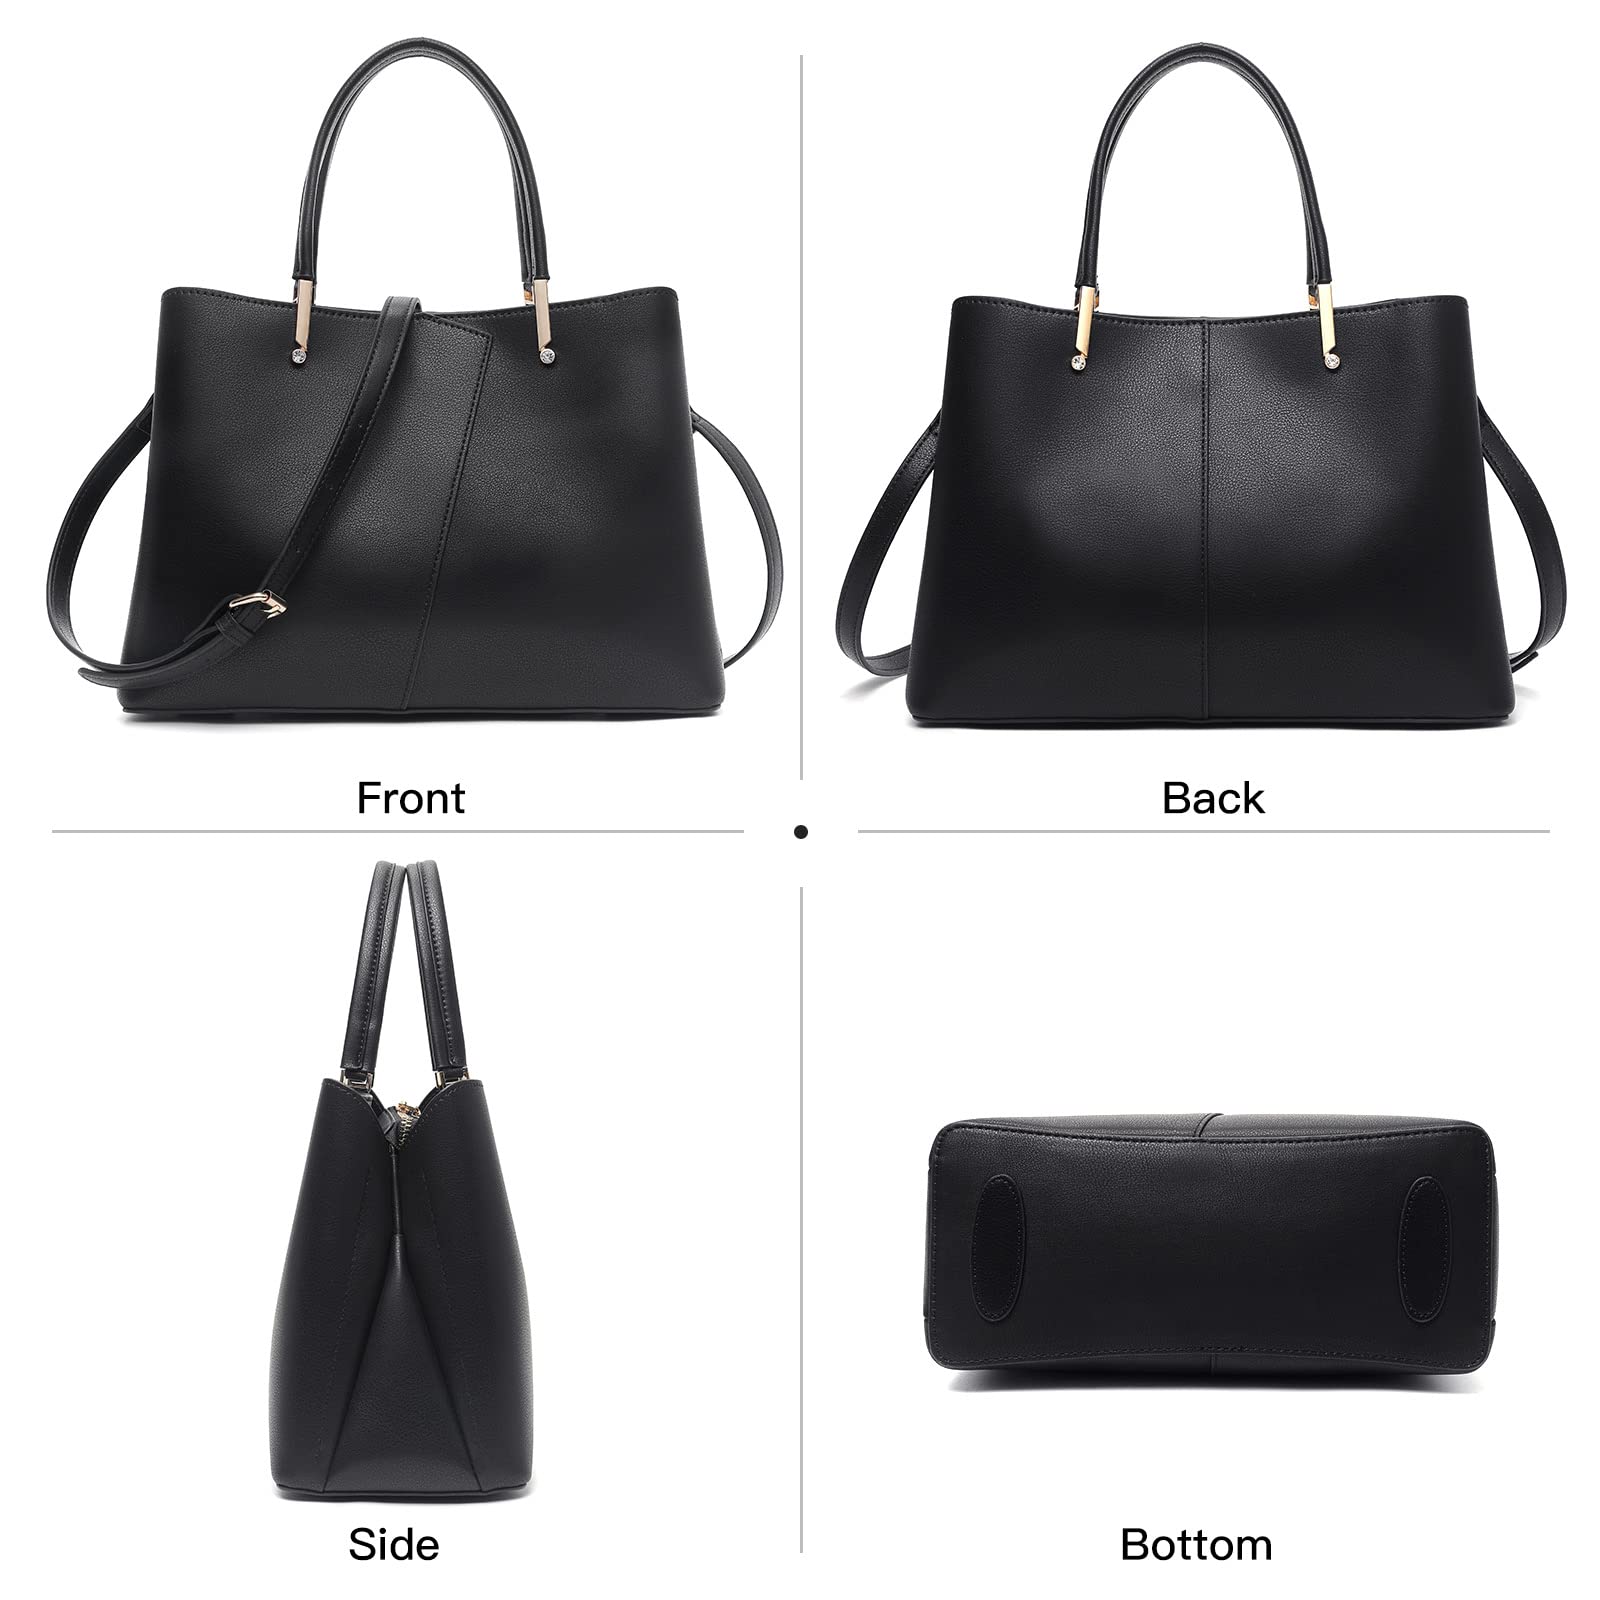 HENG REN Women's Leather Handbags Shoulder Bags,Medium Classical Style Purses Top Handle Satchel Bag for daily.